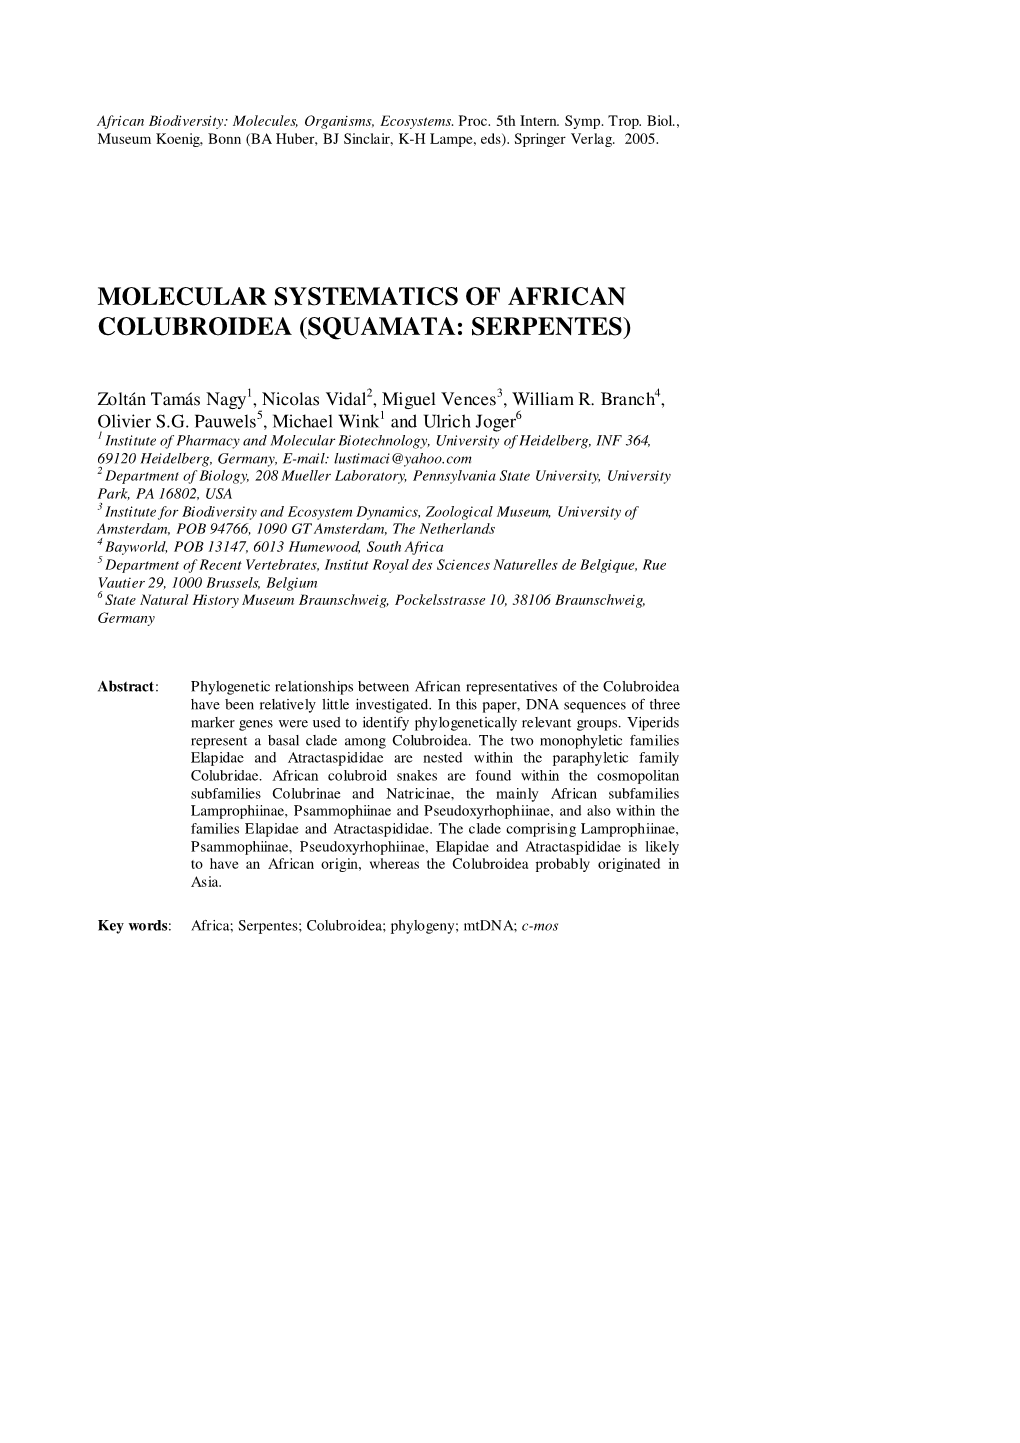 Molecular Systematics of African Colubroidea (Squamata: Serpentes)